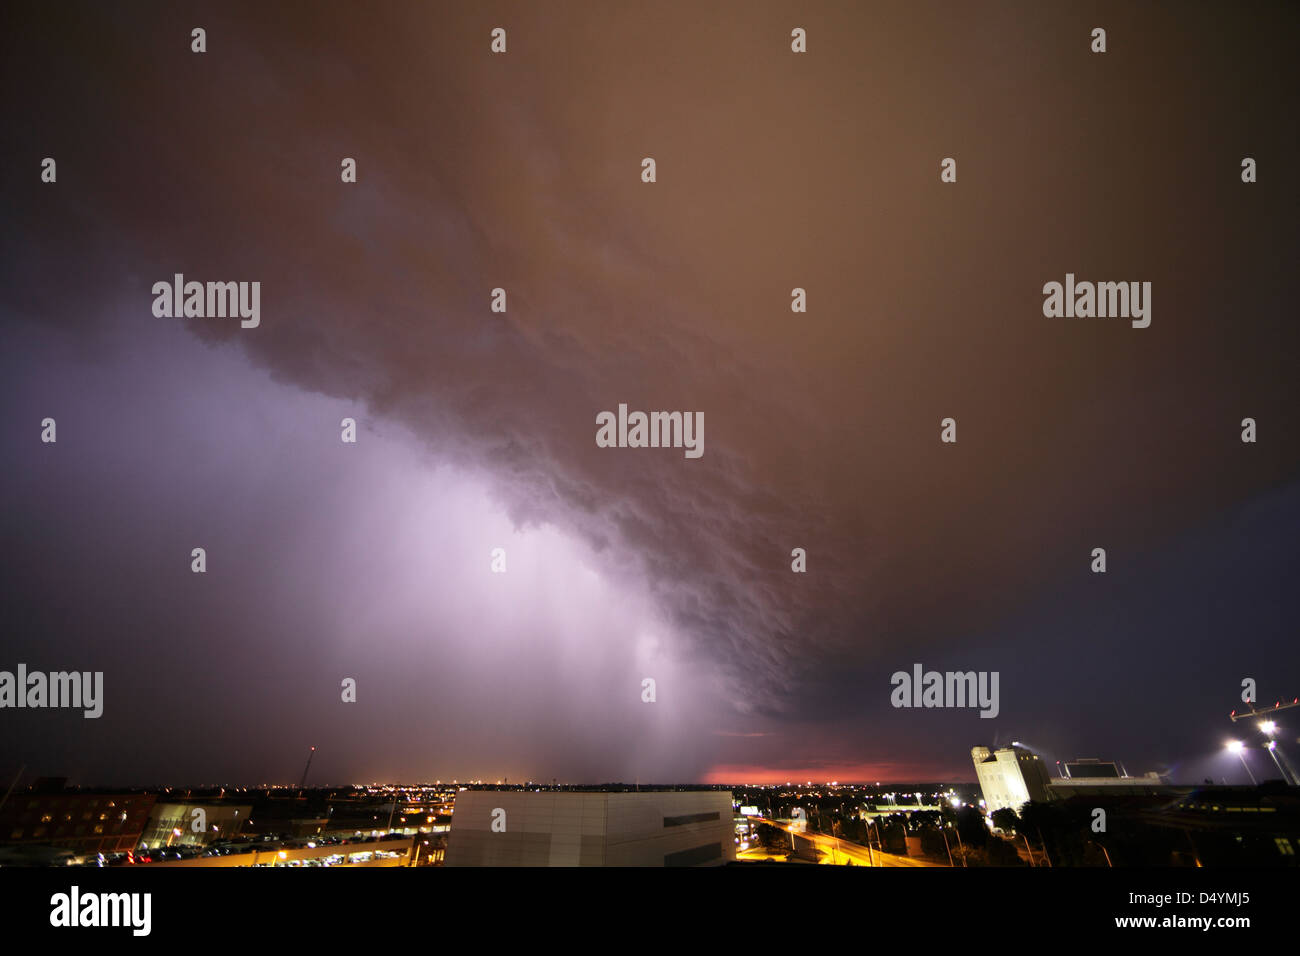 Large nighttime storm, lit by lightning above city. Stock Photo